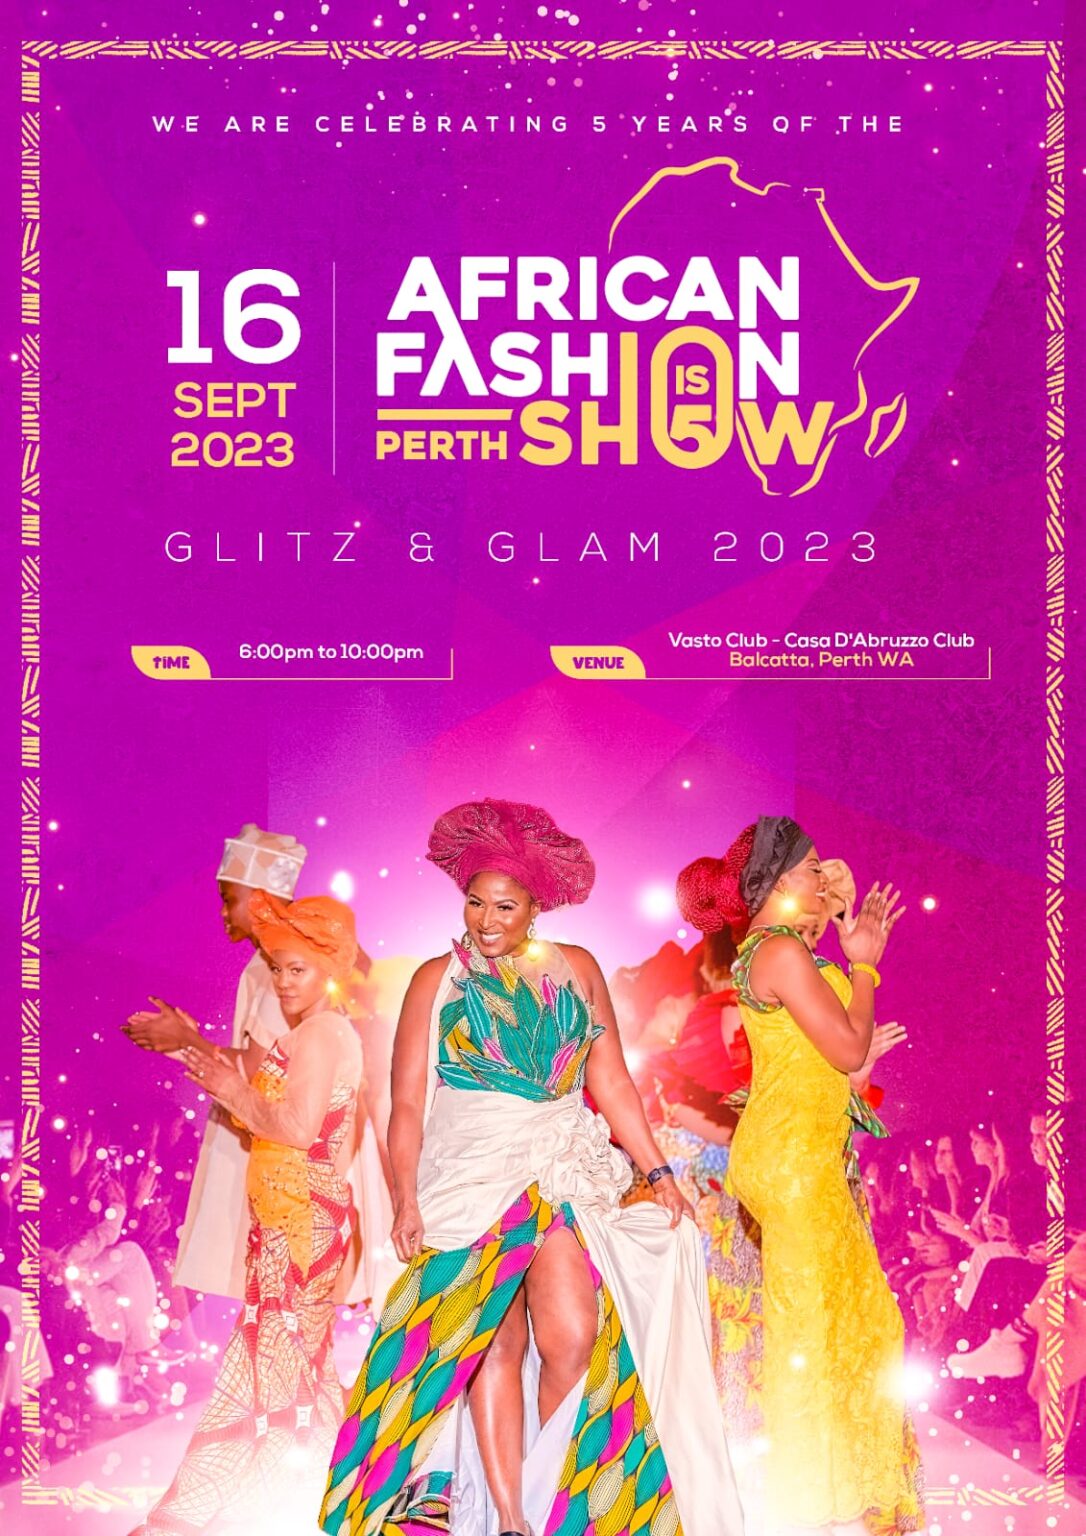 The 5th African Fashion Show Perth – African Fashion Show Perth